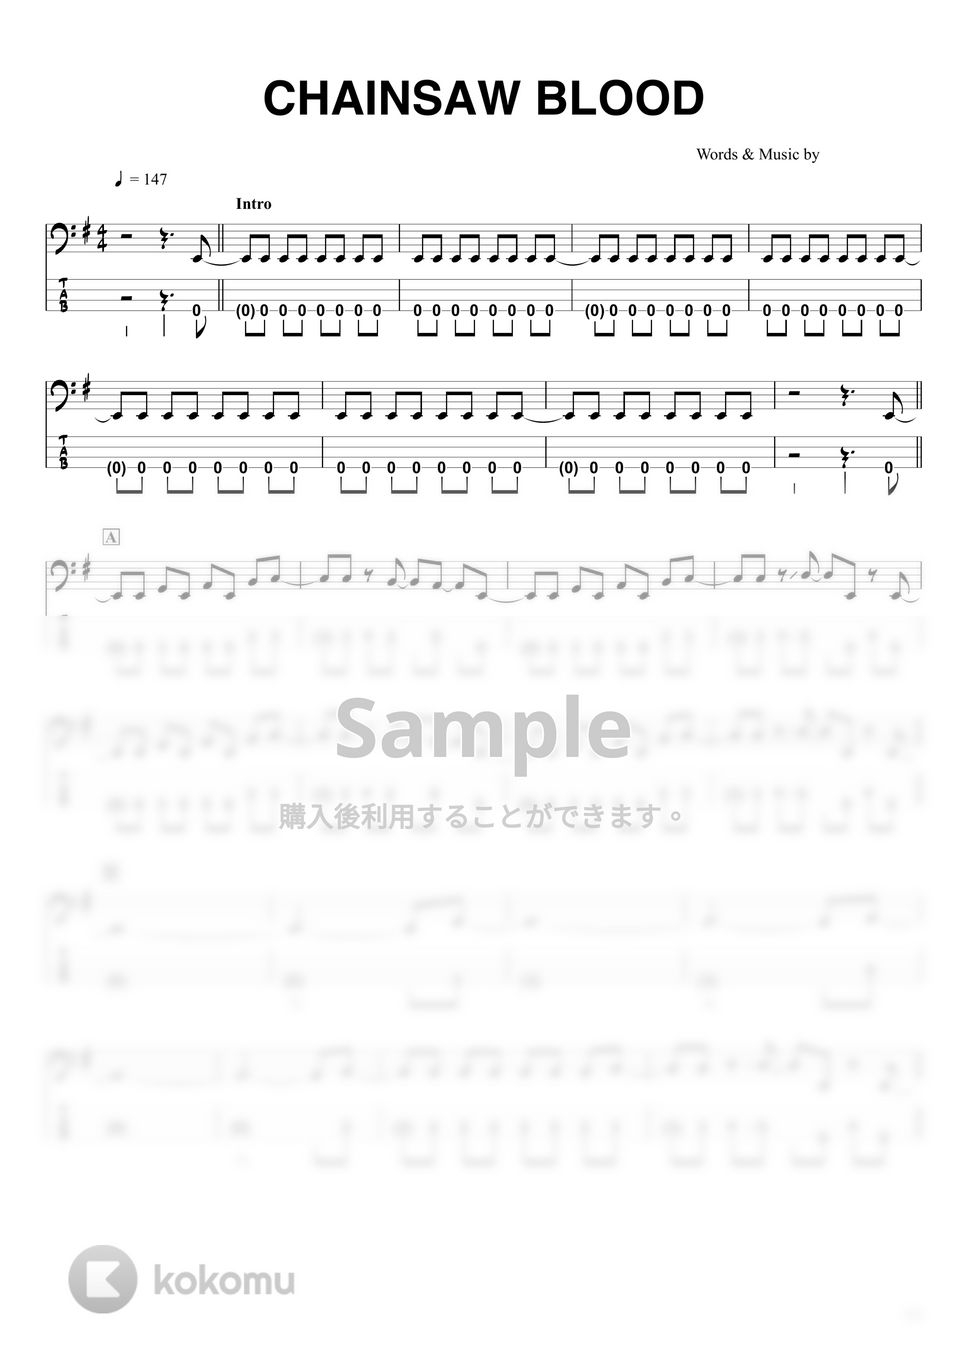 Vaundy - CHAINSAW BLOOD (ベースTAB譜☆4弦ベース対応) by swbass